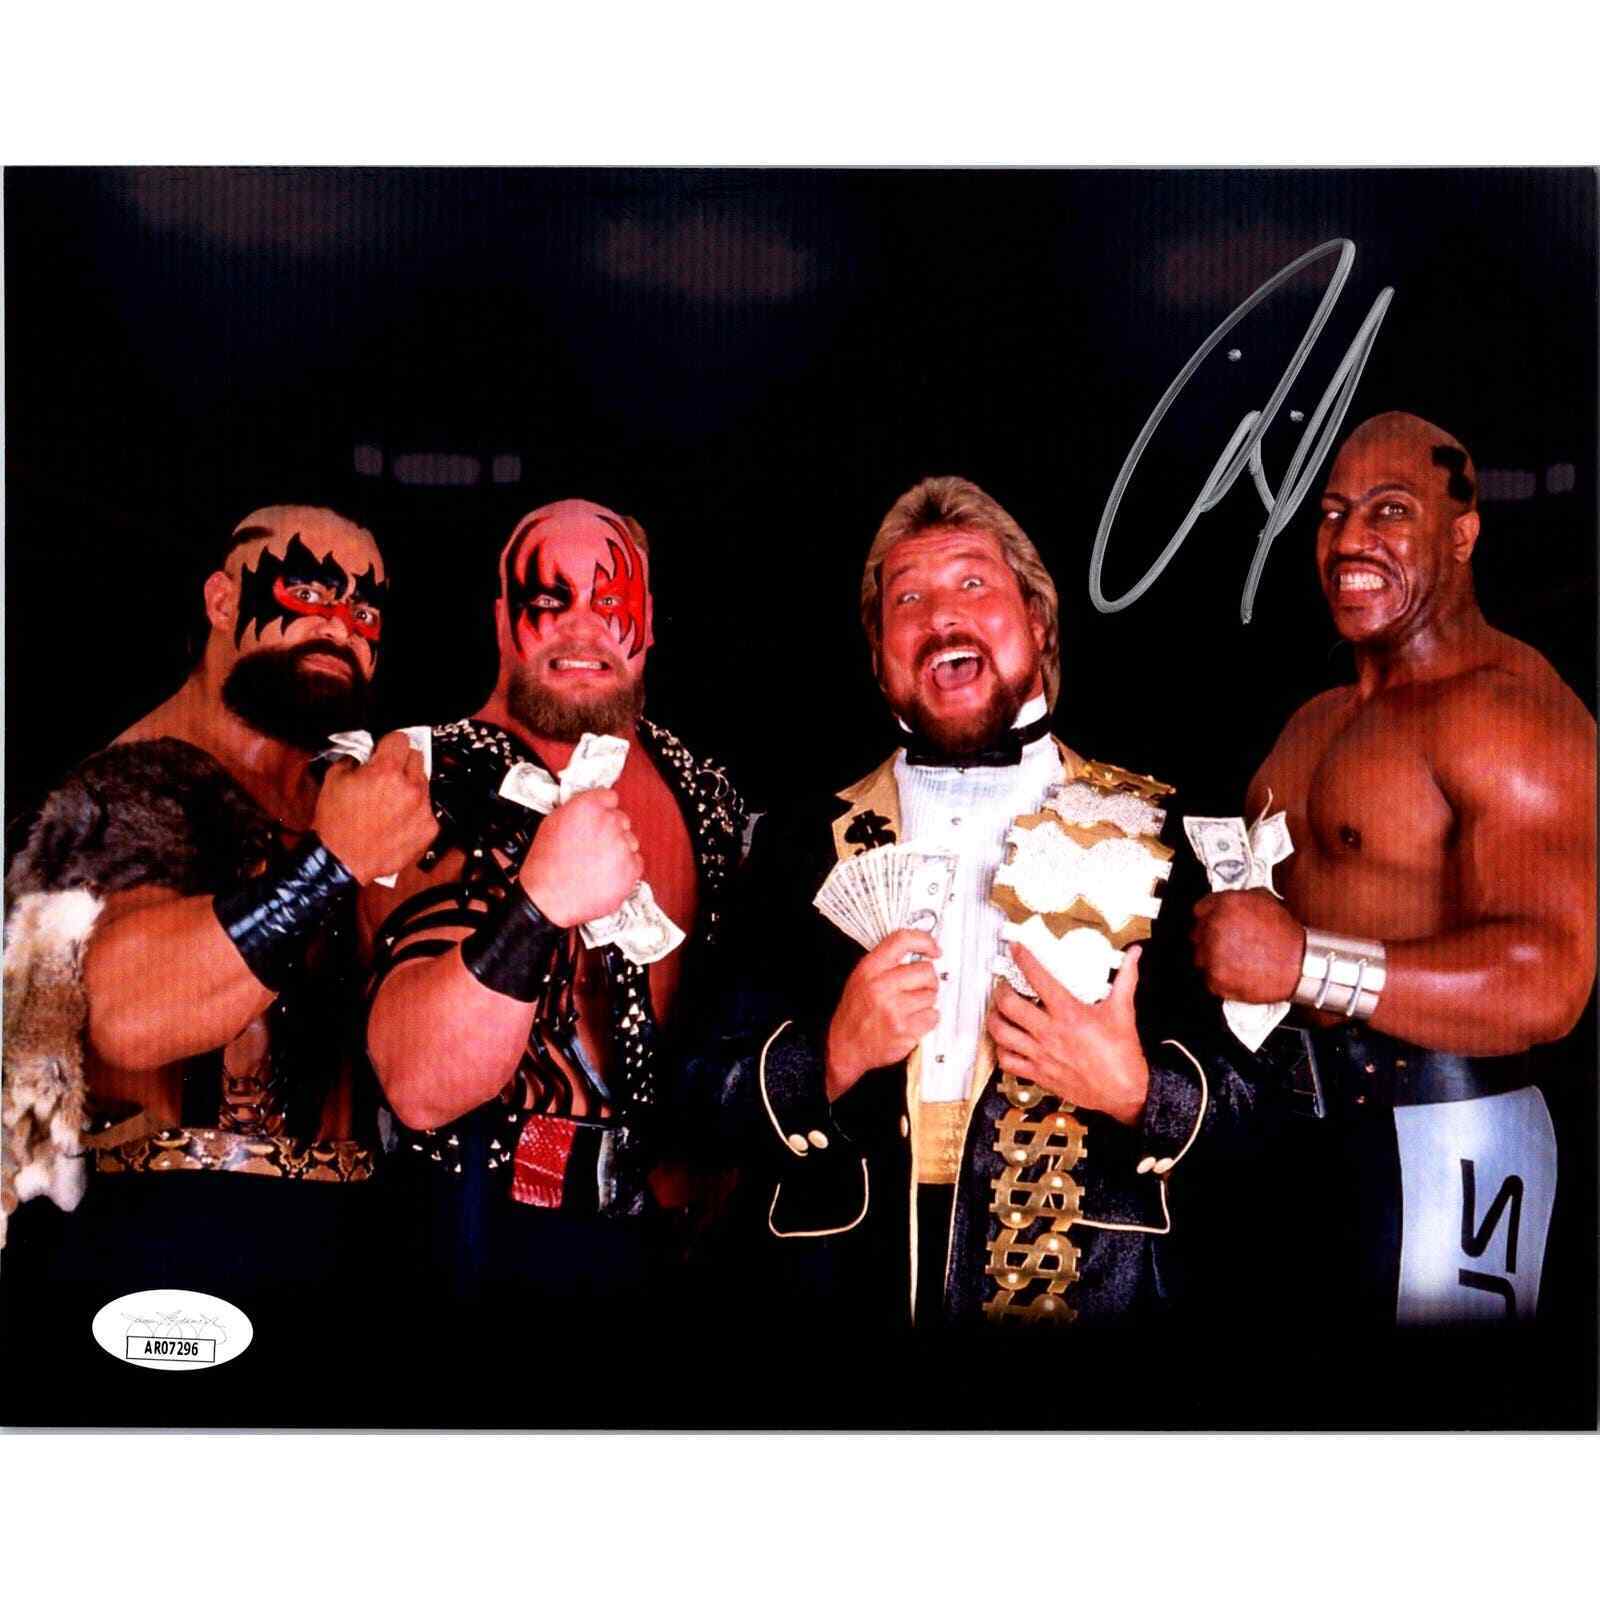 Zeus Tommy Tiny Lister Signed 8x10 Photo WWF WWE - JSA Authenticated